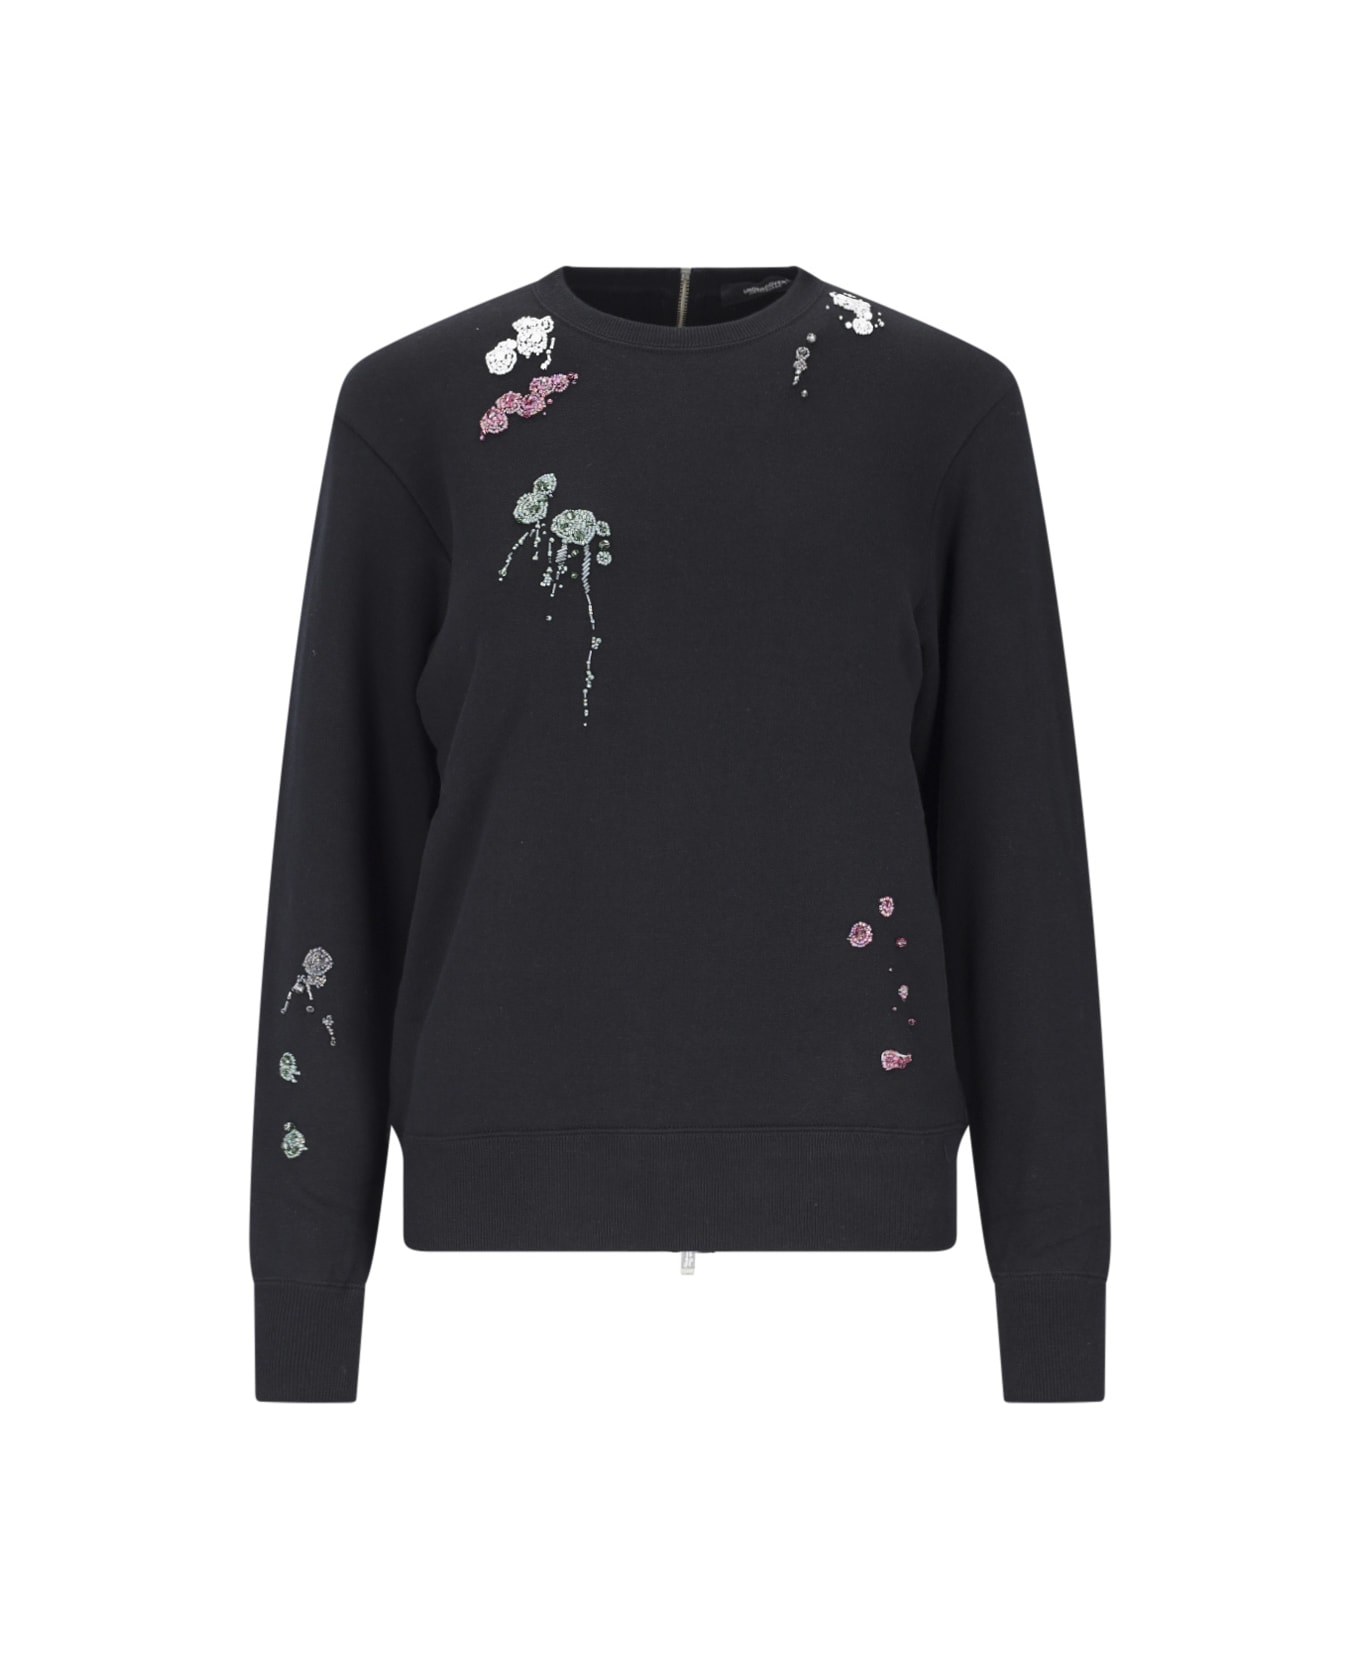 Undercover Jun Takahashi Embroidery Crewneck Sweatshirt - Black  